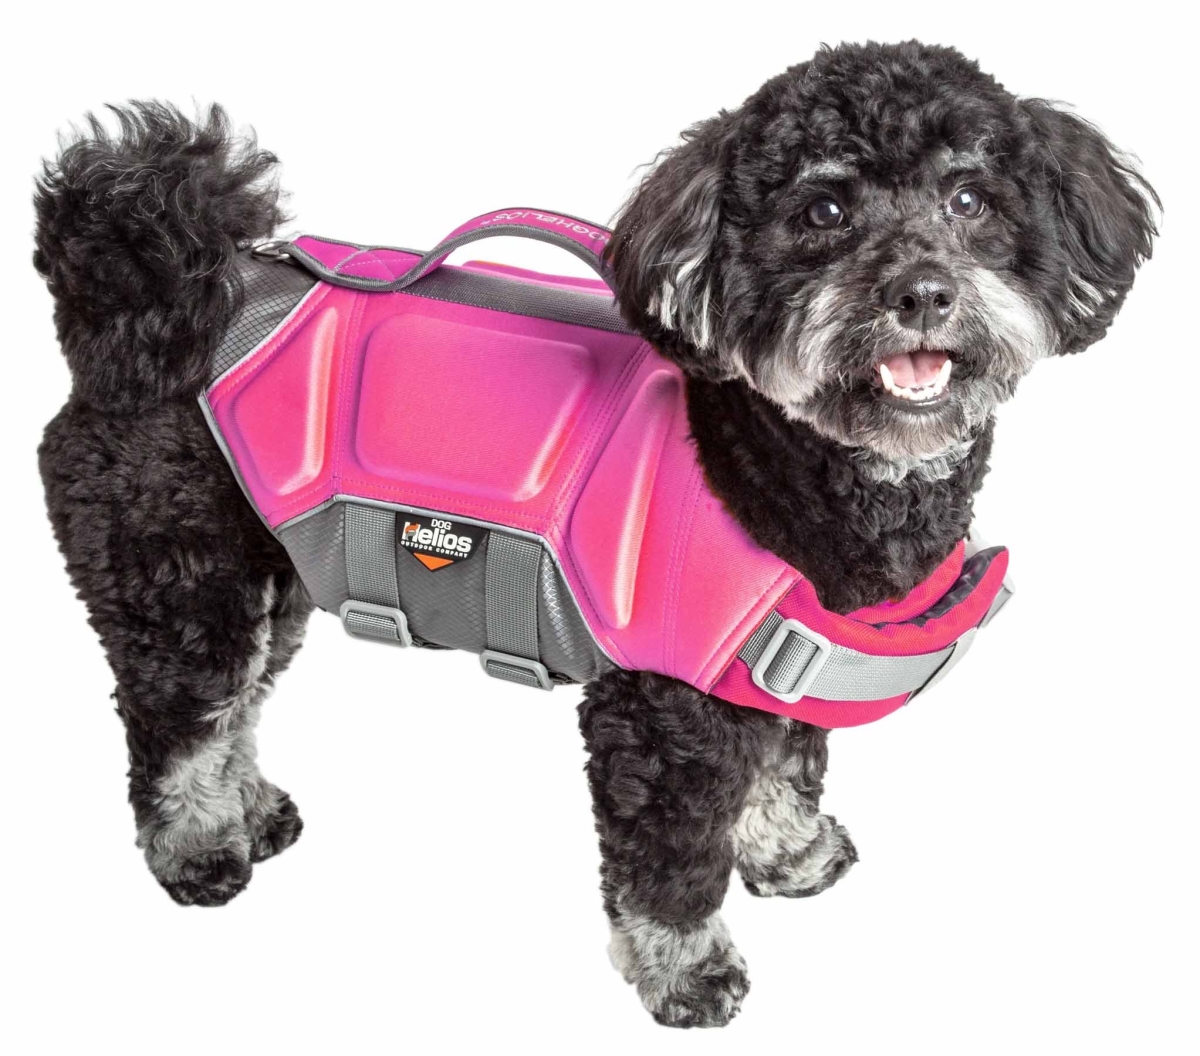 Ha18pklg Tidal Guard Multi-point Strategically-stitched Reflective Pet Dog Life Jacket Vest - Pink, Large